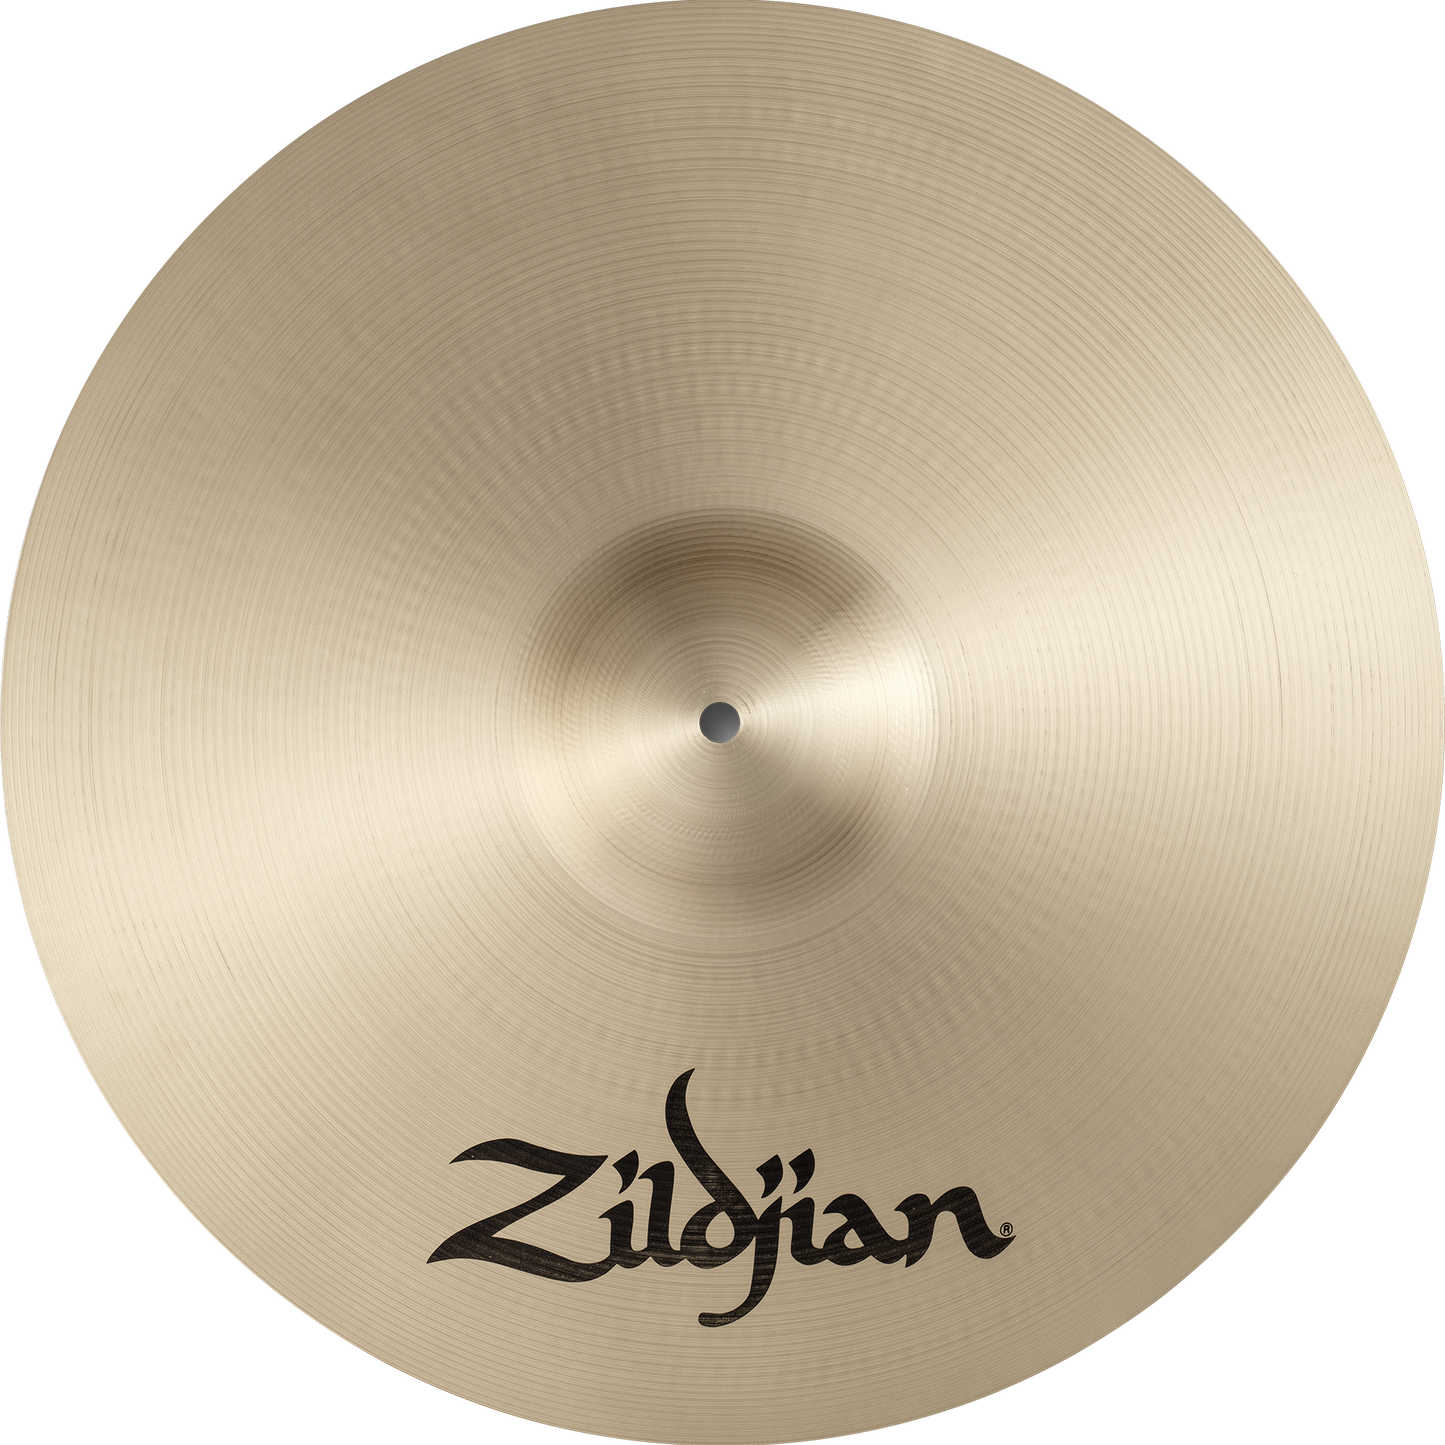 Zildjian A Series 16" Medium Thin Crash Cymbal